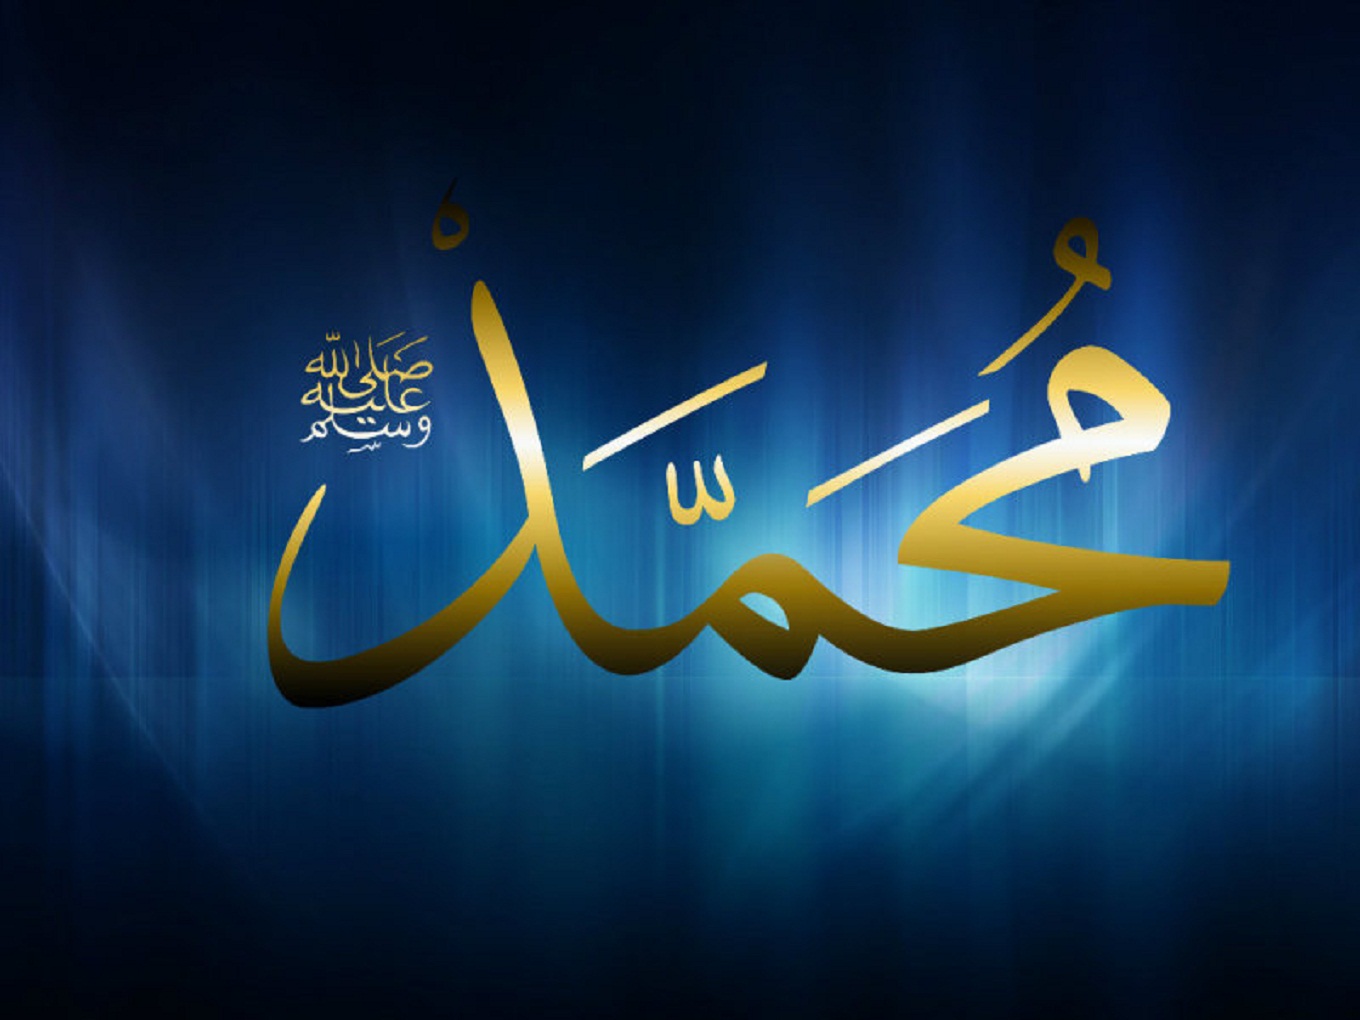 Free Download HD Wallpapers: Beautiful Islamic HD Wallpapers